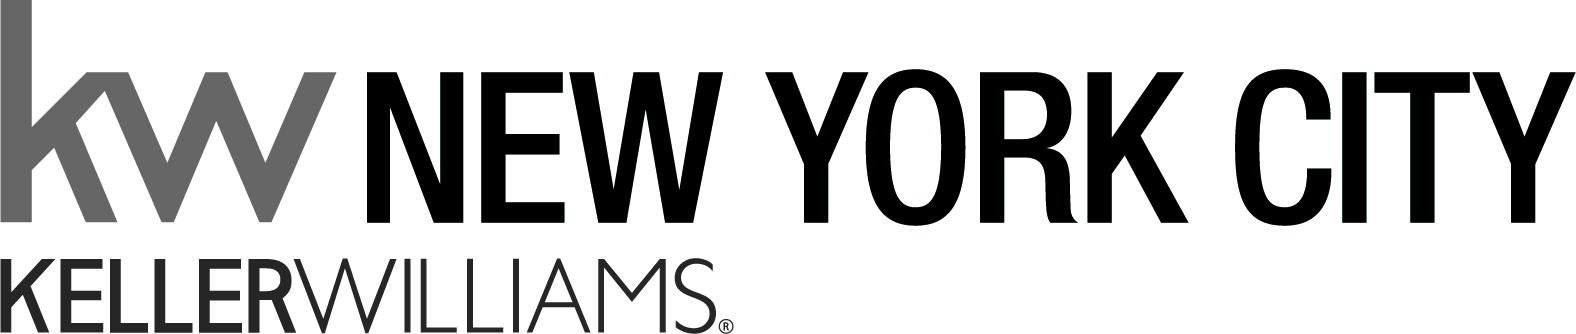 KellerWilliams_NewYorkCity_Logo_GRY.jpg